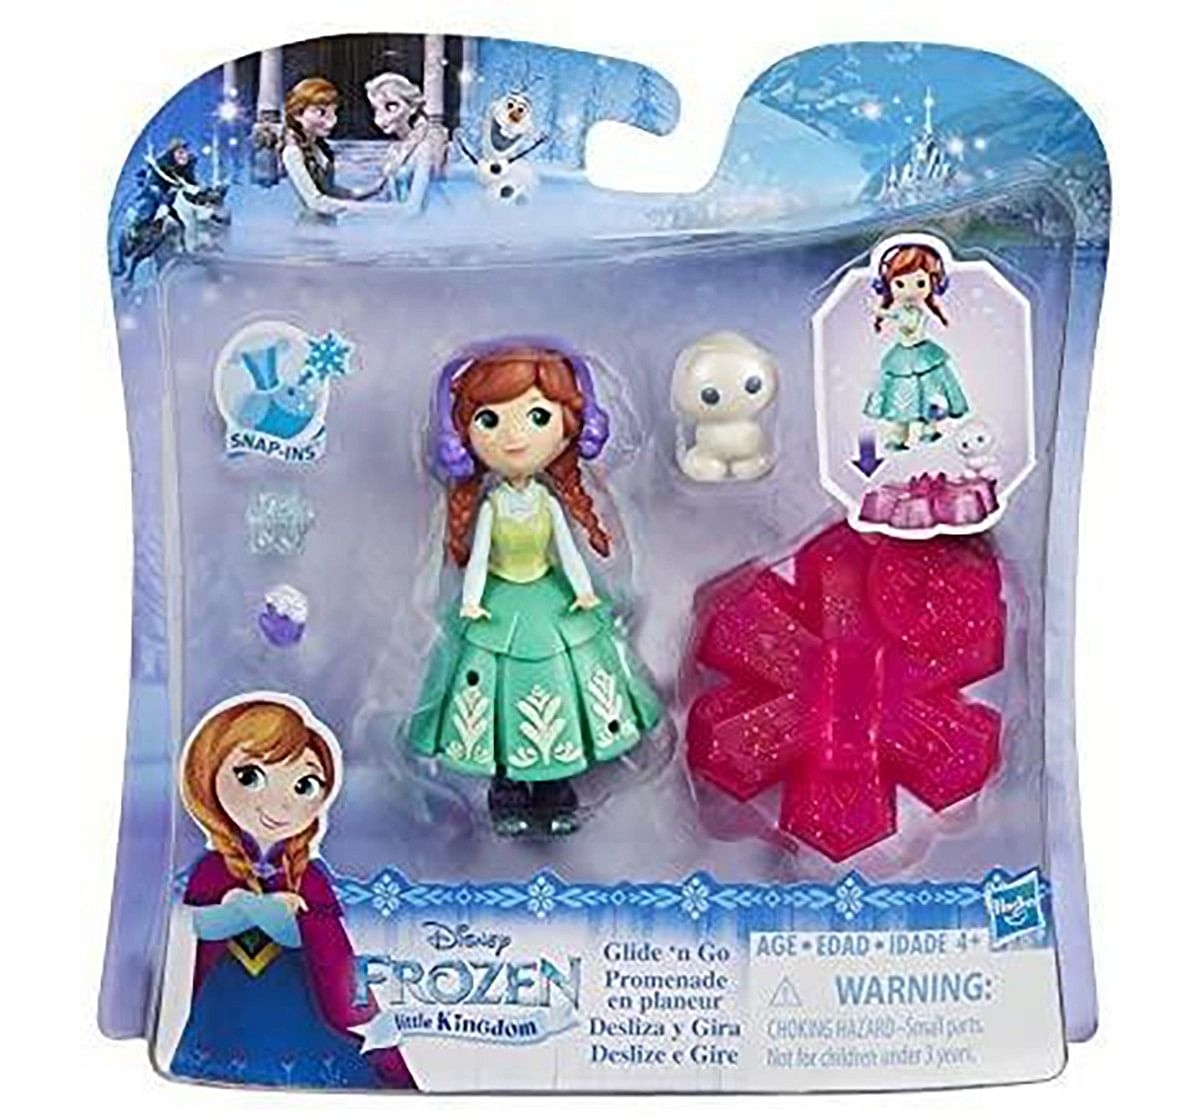  Disney Frozen Little Kingdom Glide 'N Go Assorted Dolls & Accessories for Girls age 4Y+ 